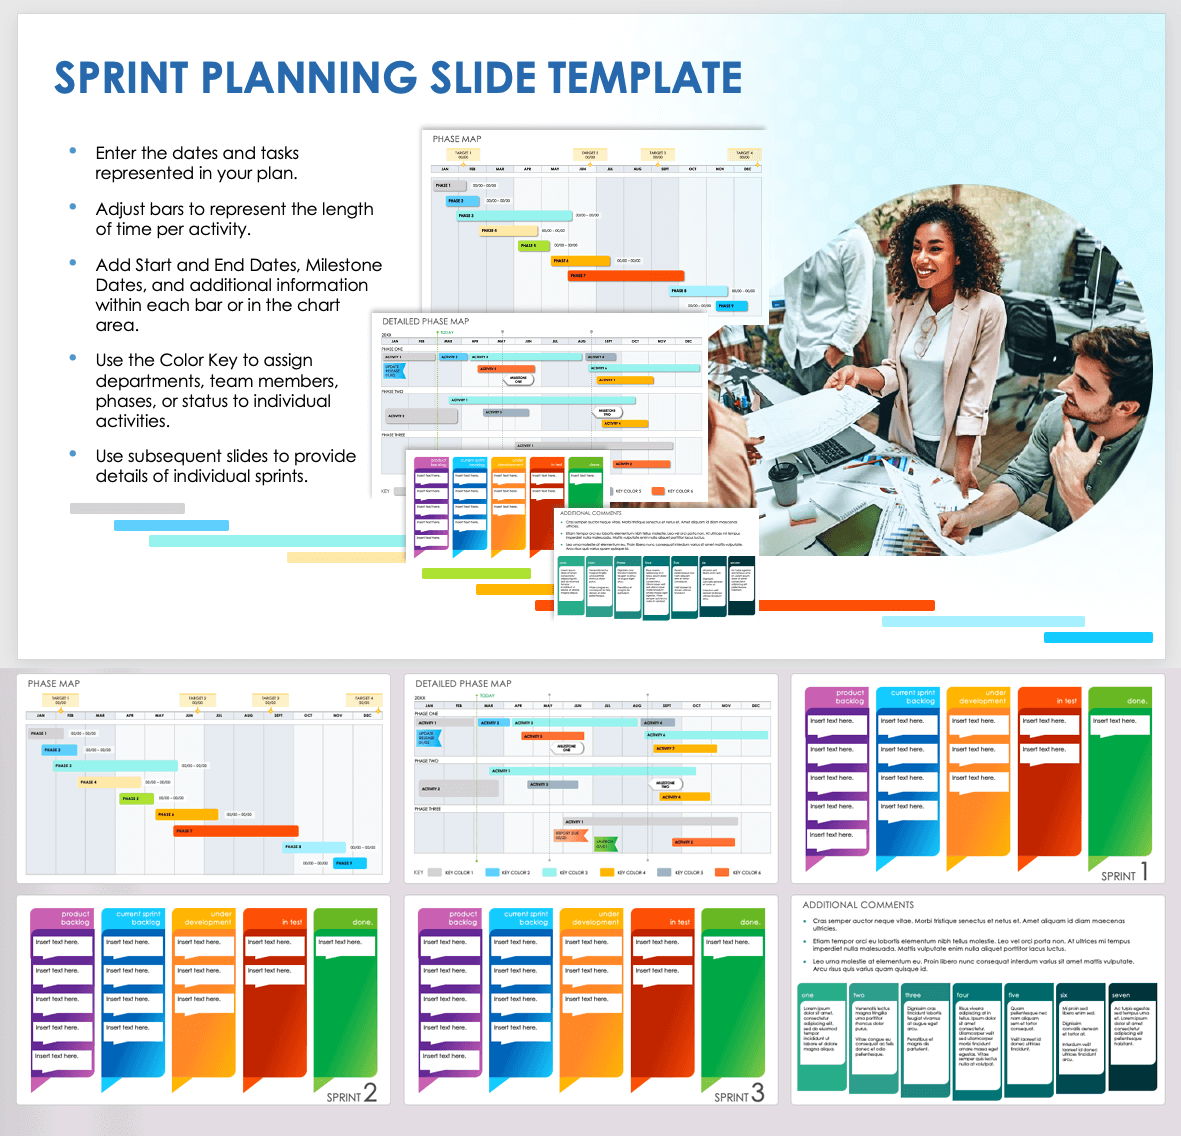 Sprint Planning Slide Template